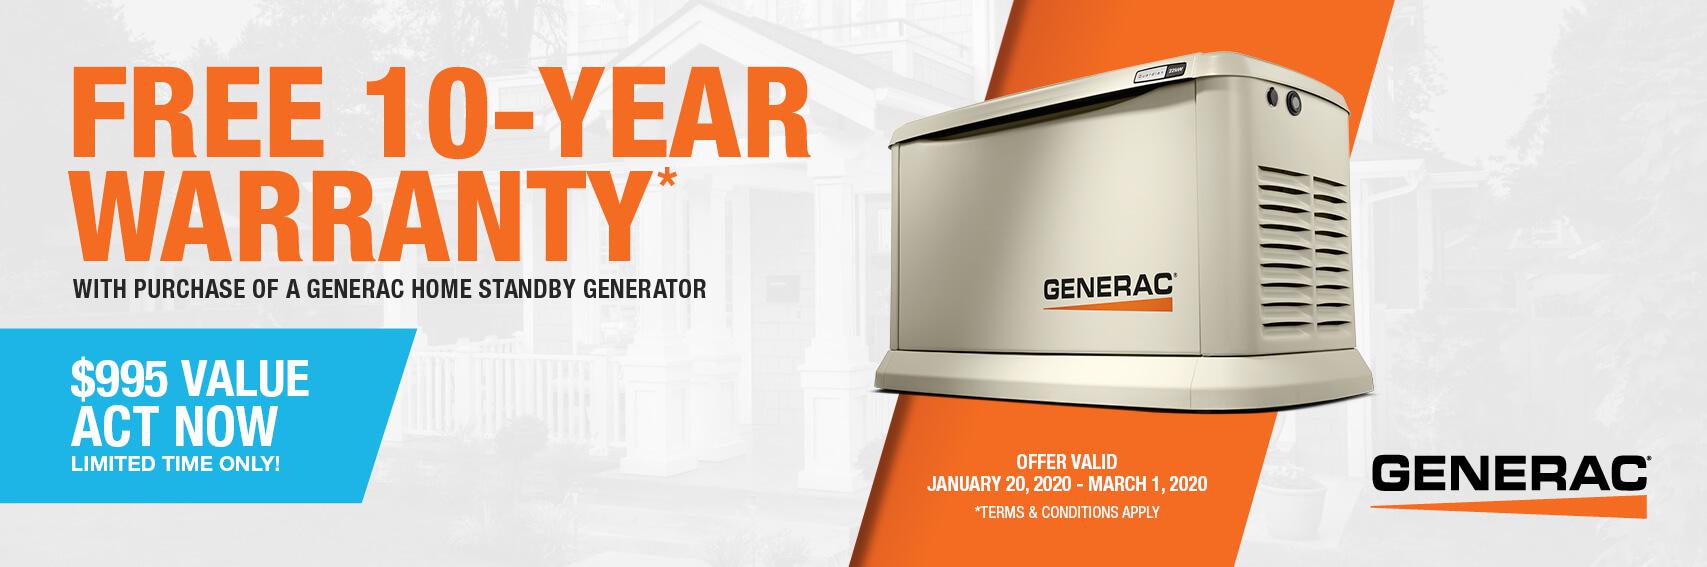 Homestandby Generator Deal | Warranty Offer | Generac Dealer | COLORADO SPRINGS, CO